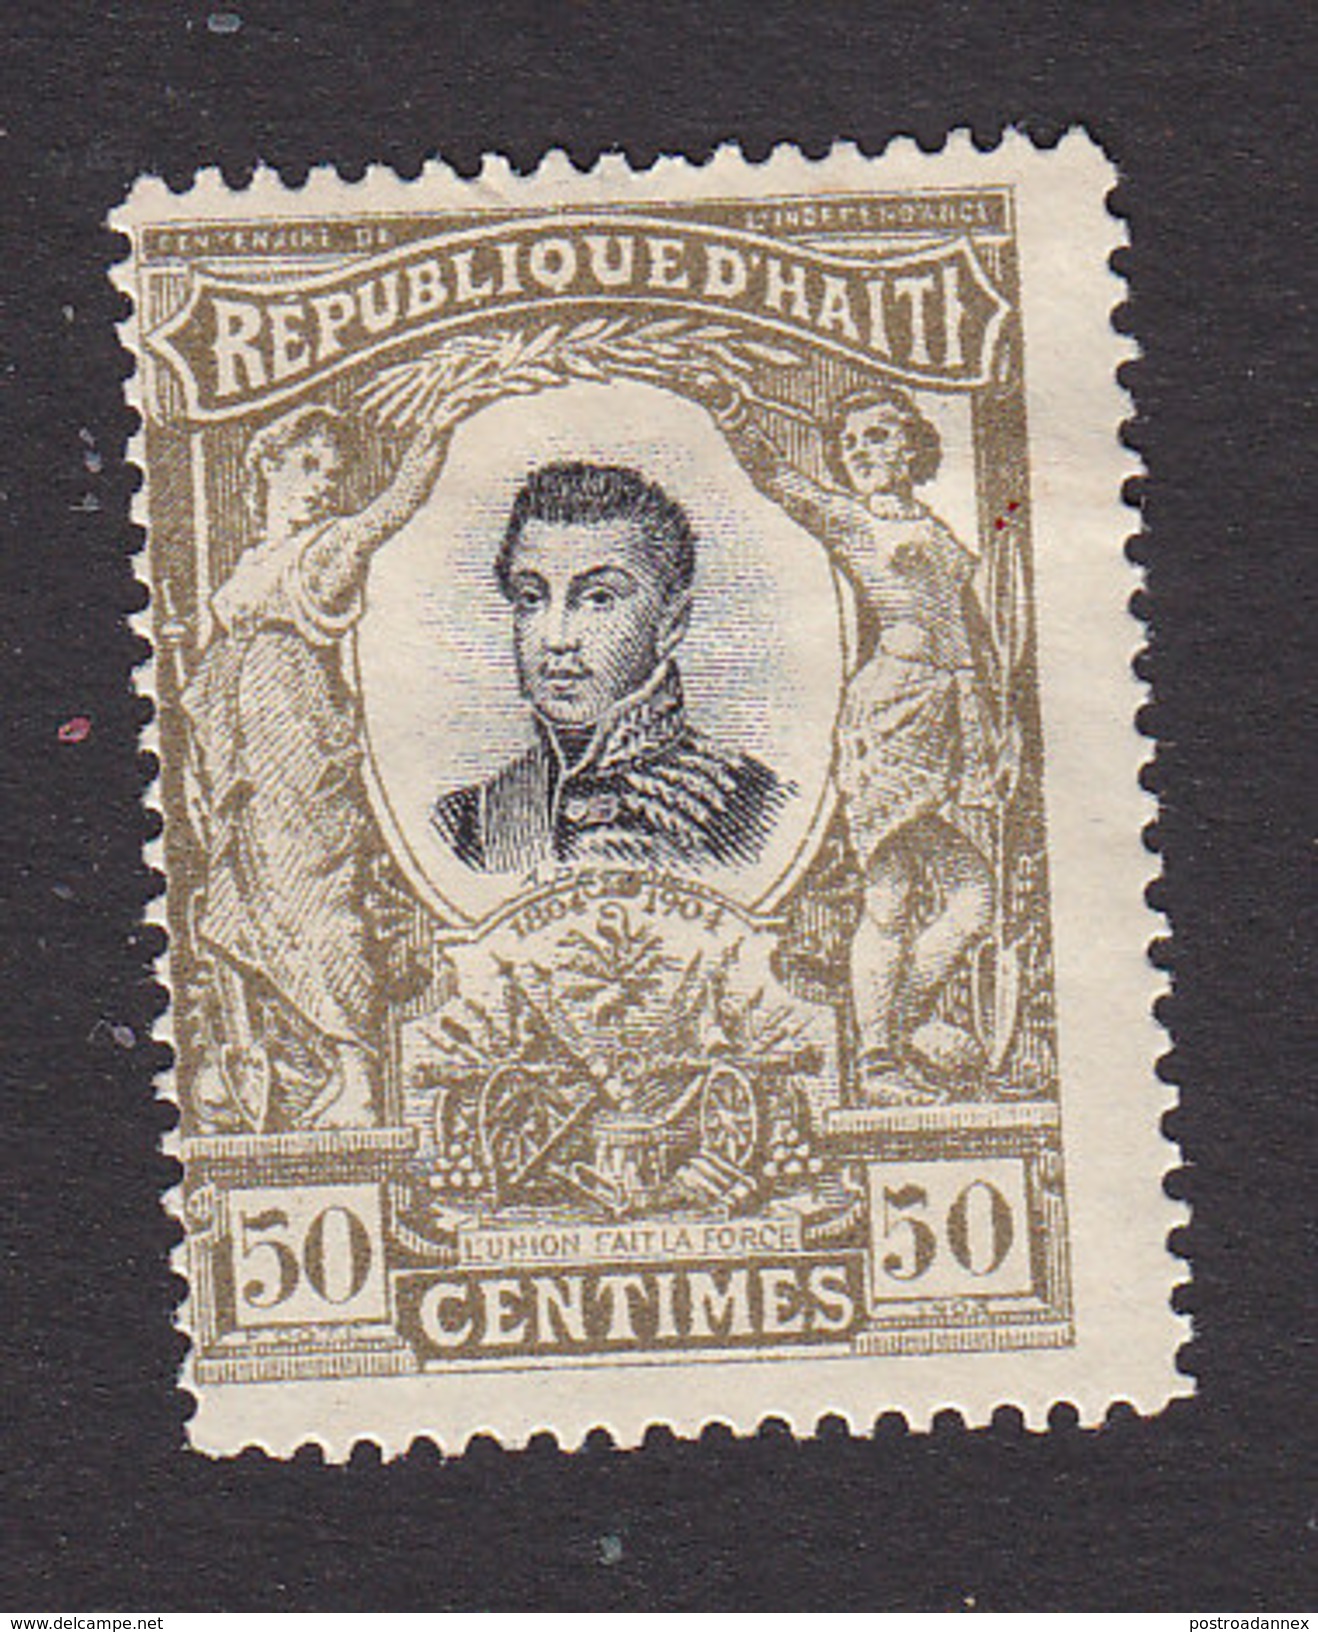 Hati, Scott #88, Mint Hinged, Pres Alexandre Sabes Petion, Issued 1903 - Haiti